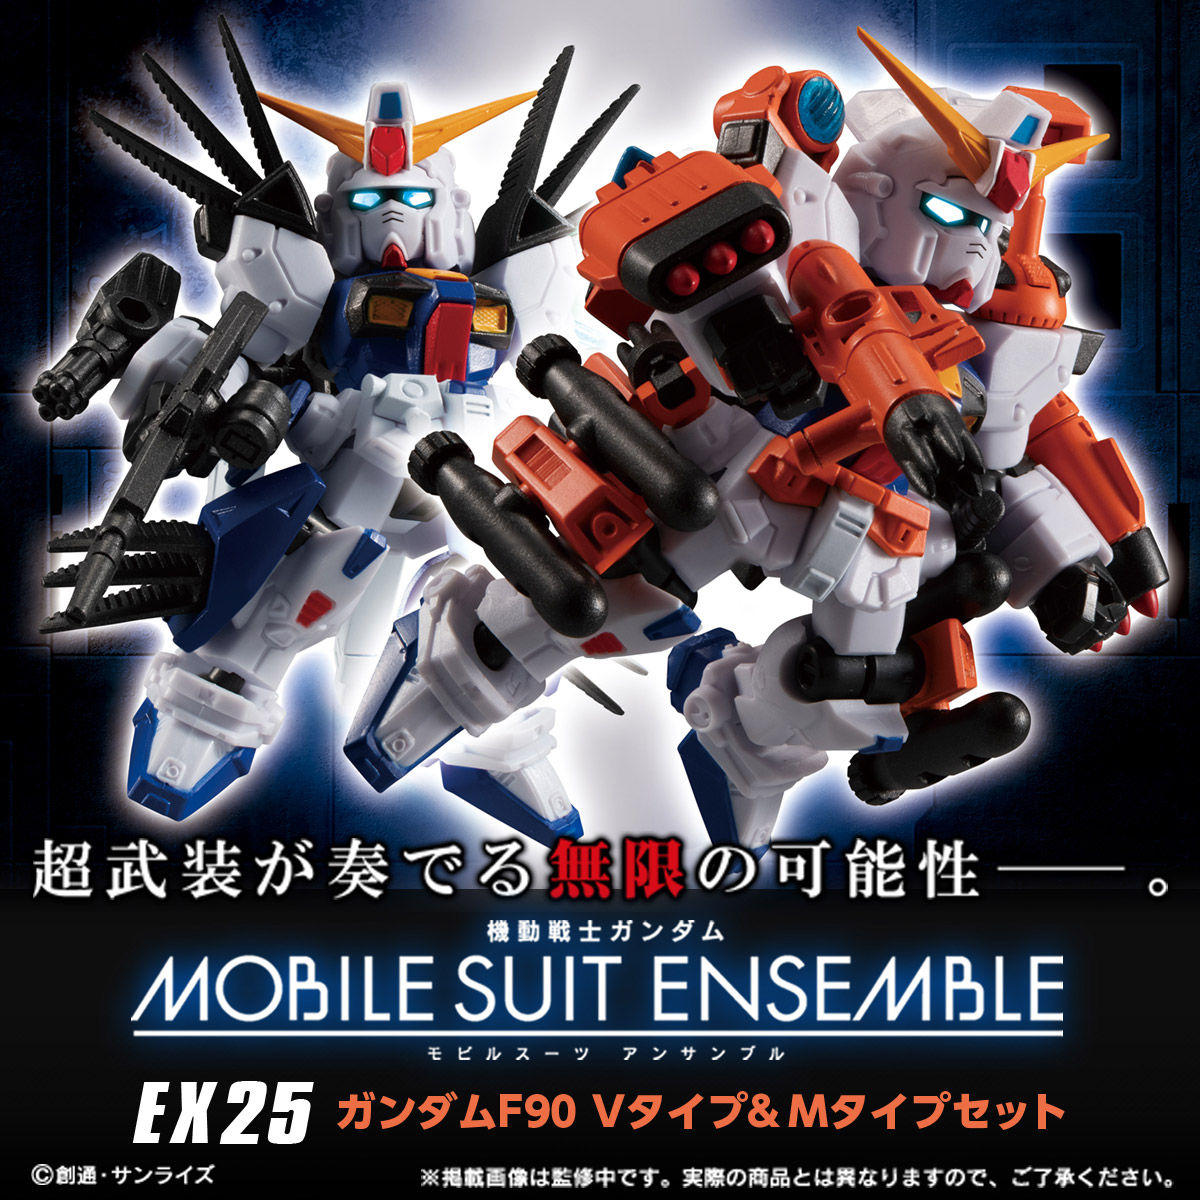 Gashapon Gundam Series: Gundam Mobile Suit Ensemble EX25 F90V Gundam F90 V.S.B.R.(Variable Speed Beam Rifle) Type + F90M Marine Type